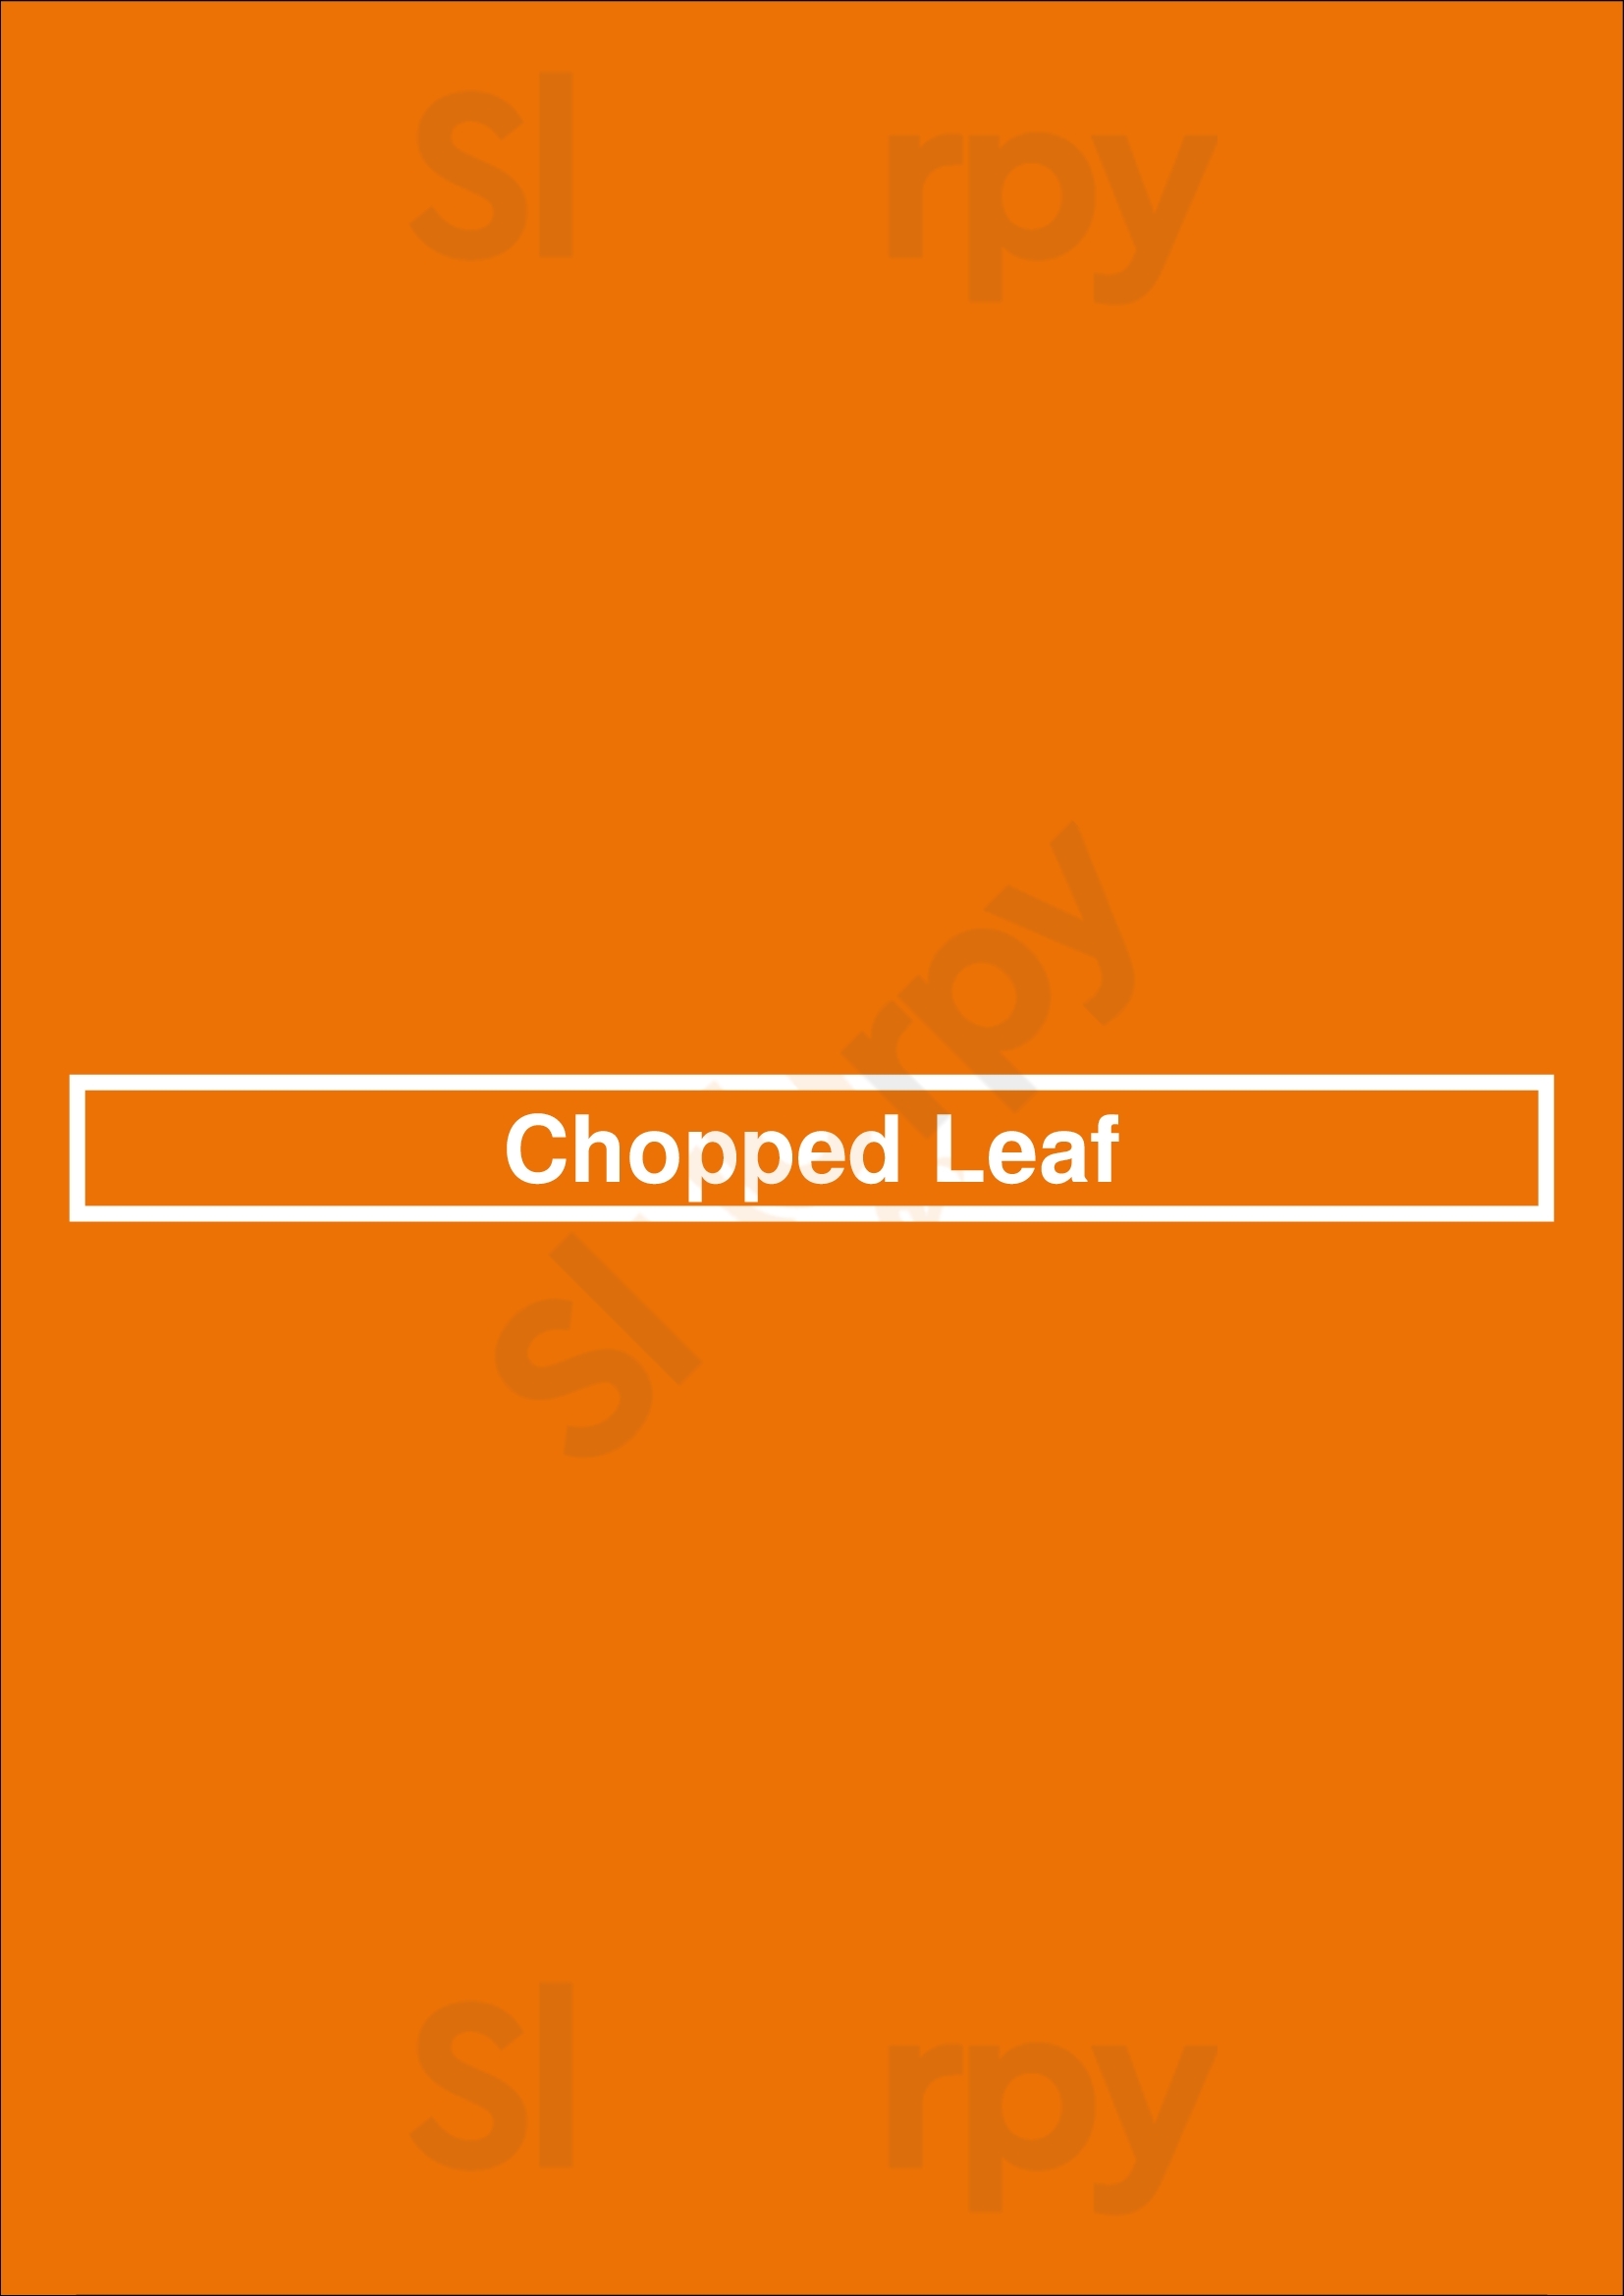 Chopped Leaf Vancouver Menu - 1